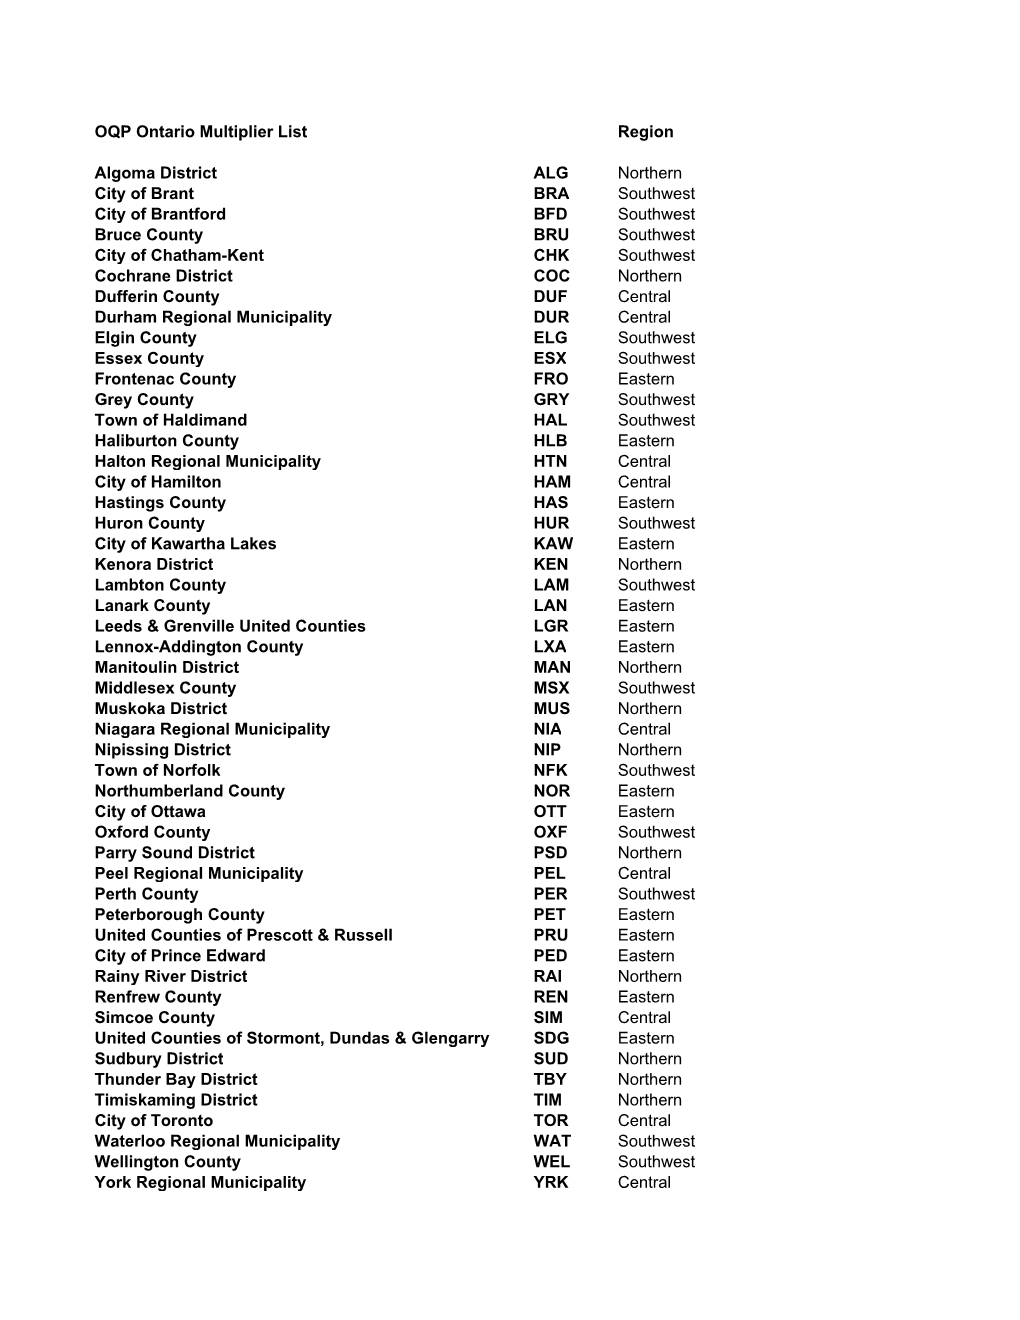 Ontario County Multiplier List